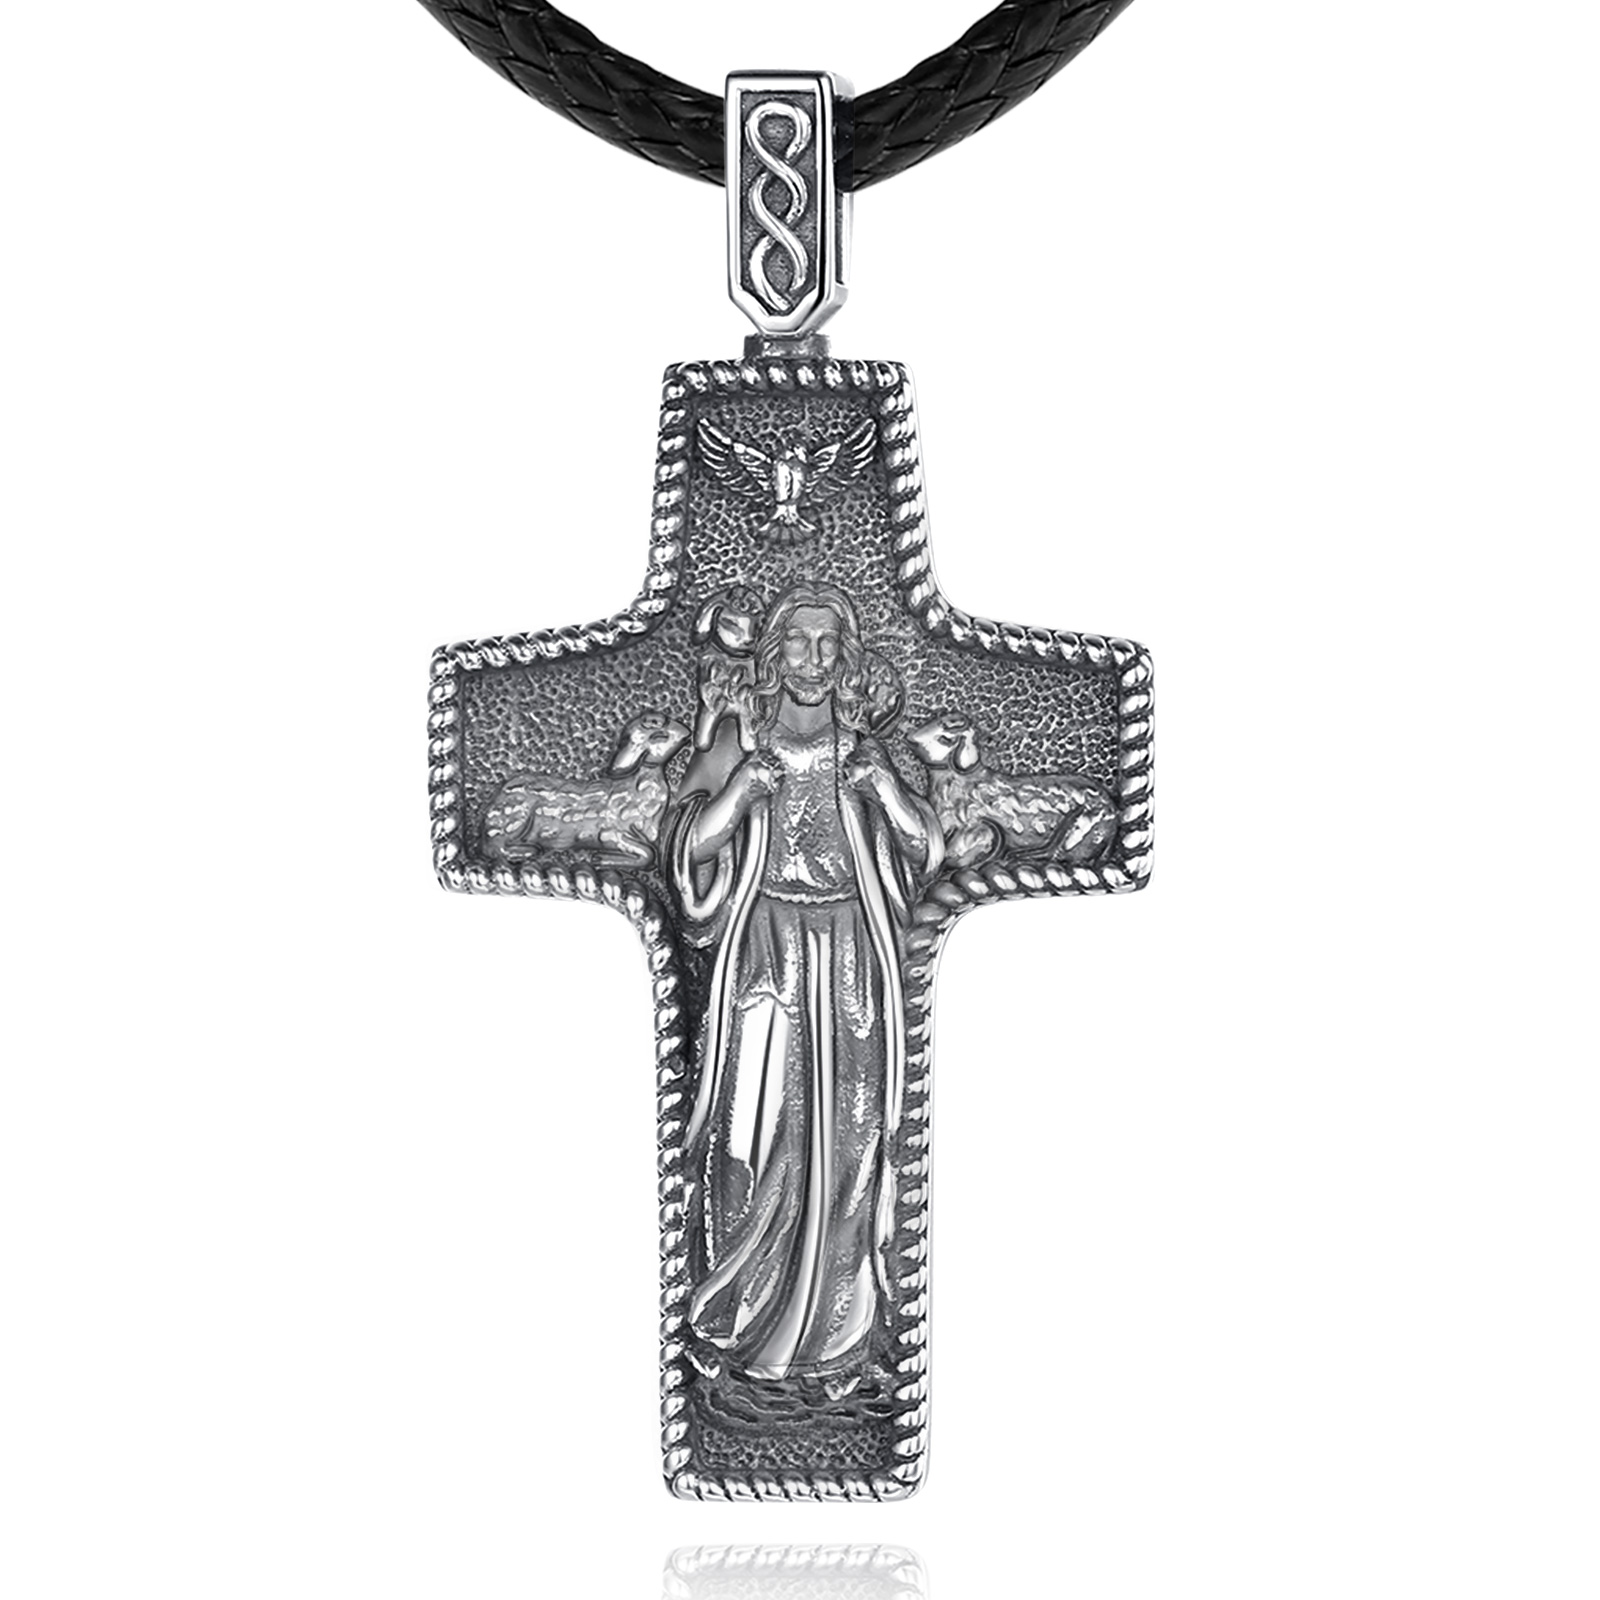 Merryshine High Quality Embossed Design 925 Sterling Silver Mens Jewelry Good Shepherd Christian Jesus Cross Pendant Necklace